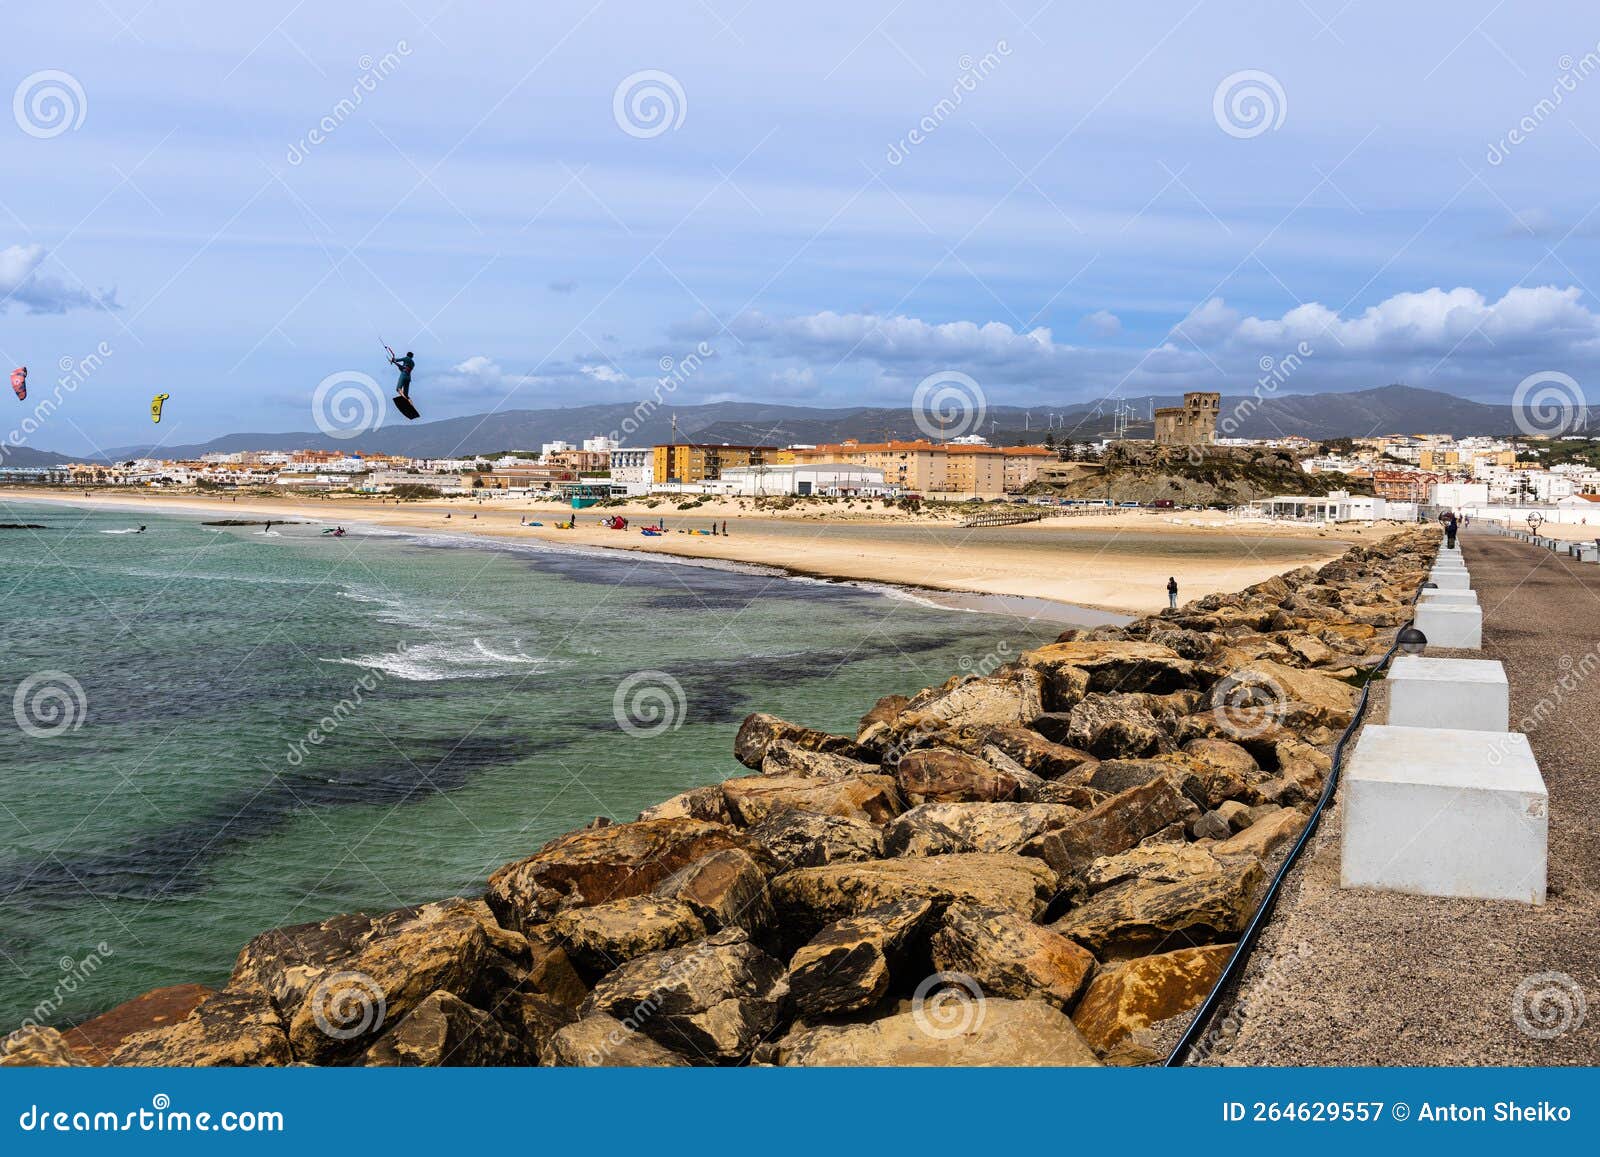 kitesurfers, ocean and beach. tarifa, andalusia, spain